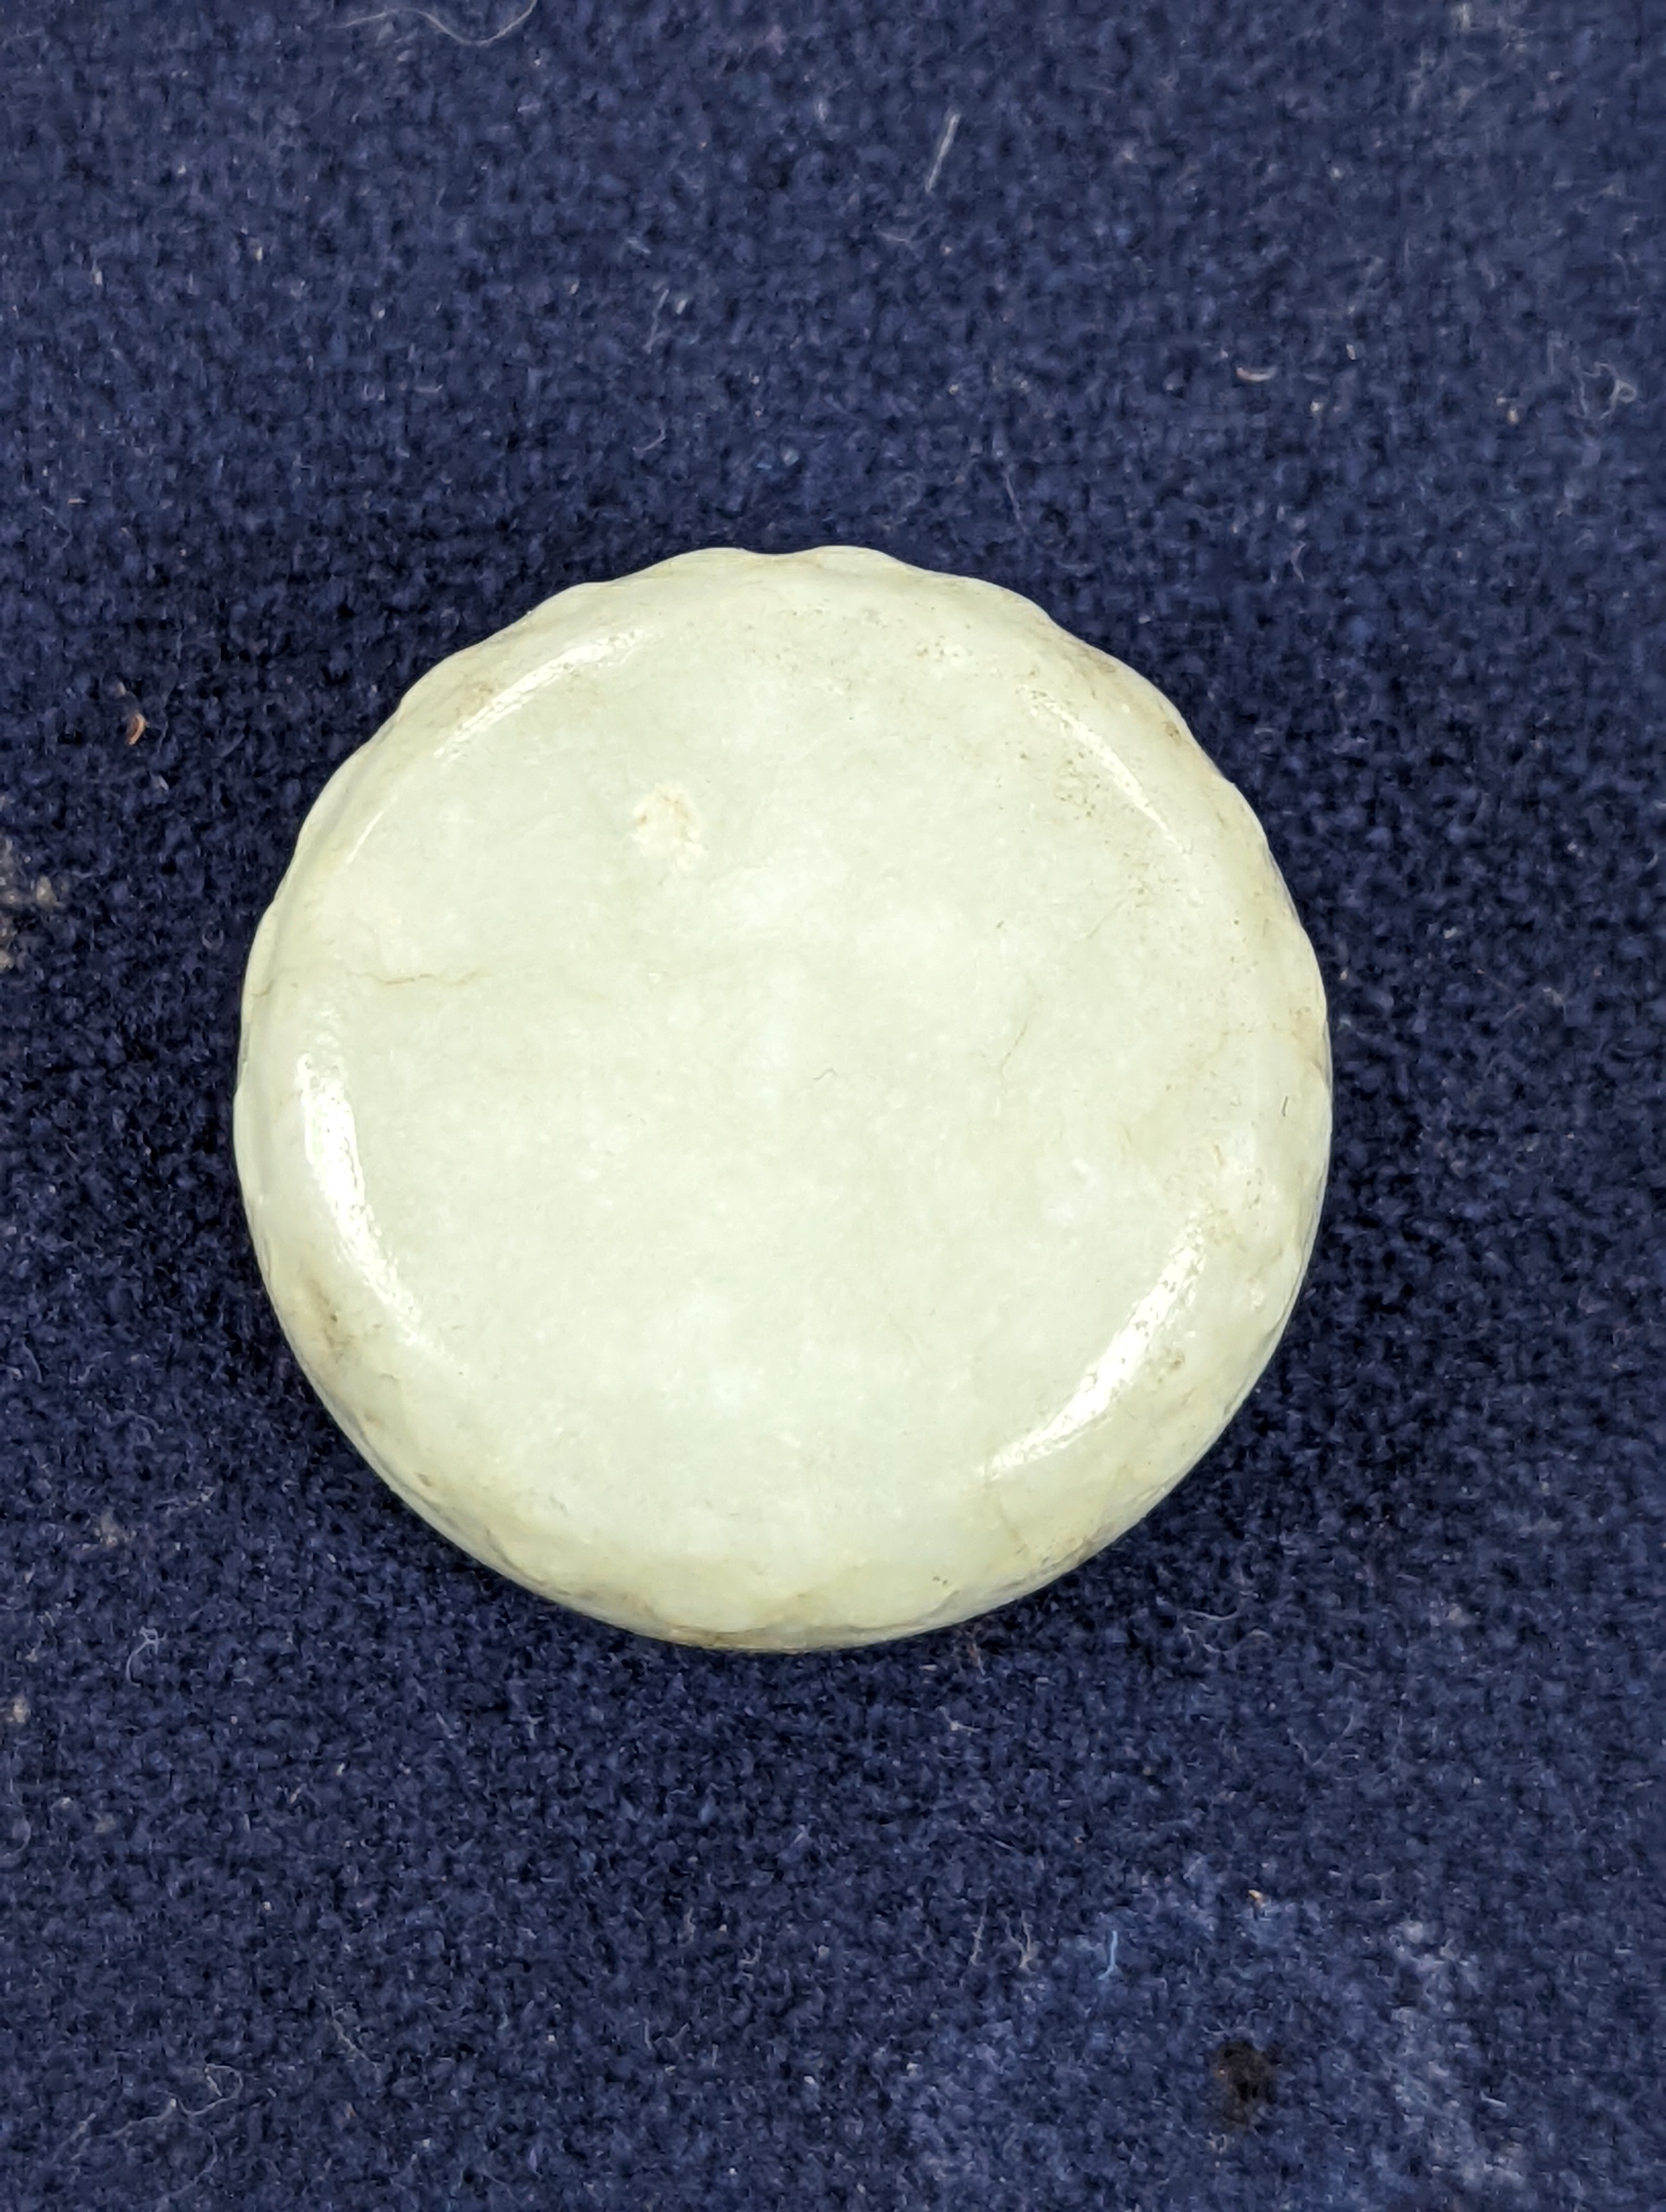 A Chinese jadeite model of a drum, 3 cm diameter